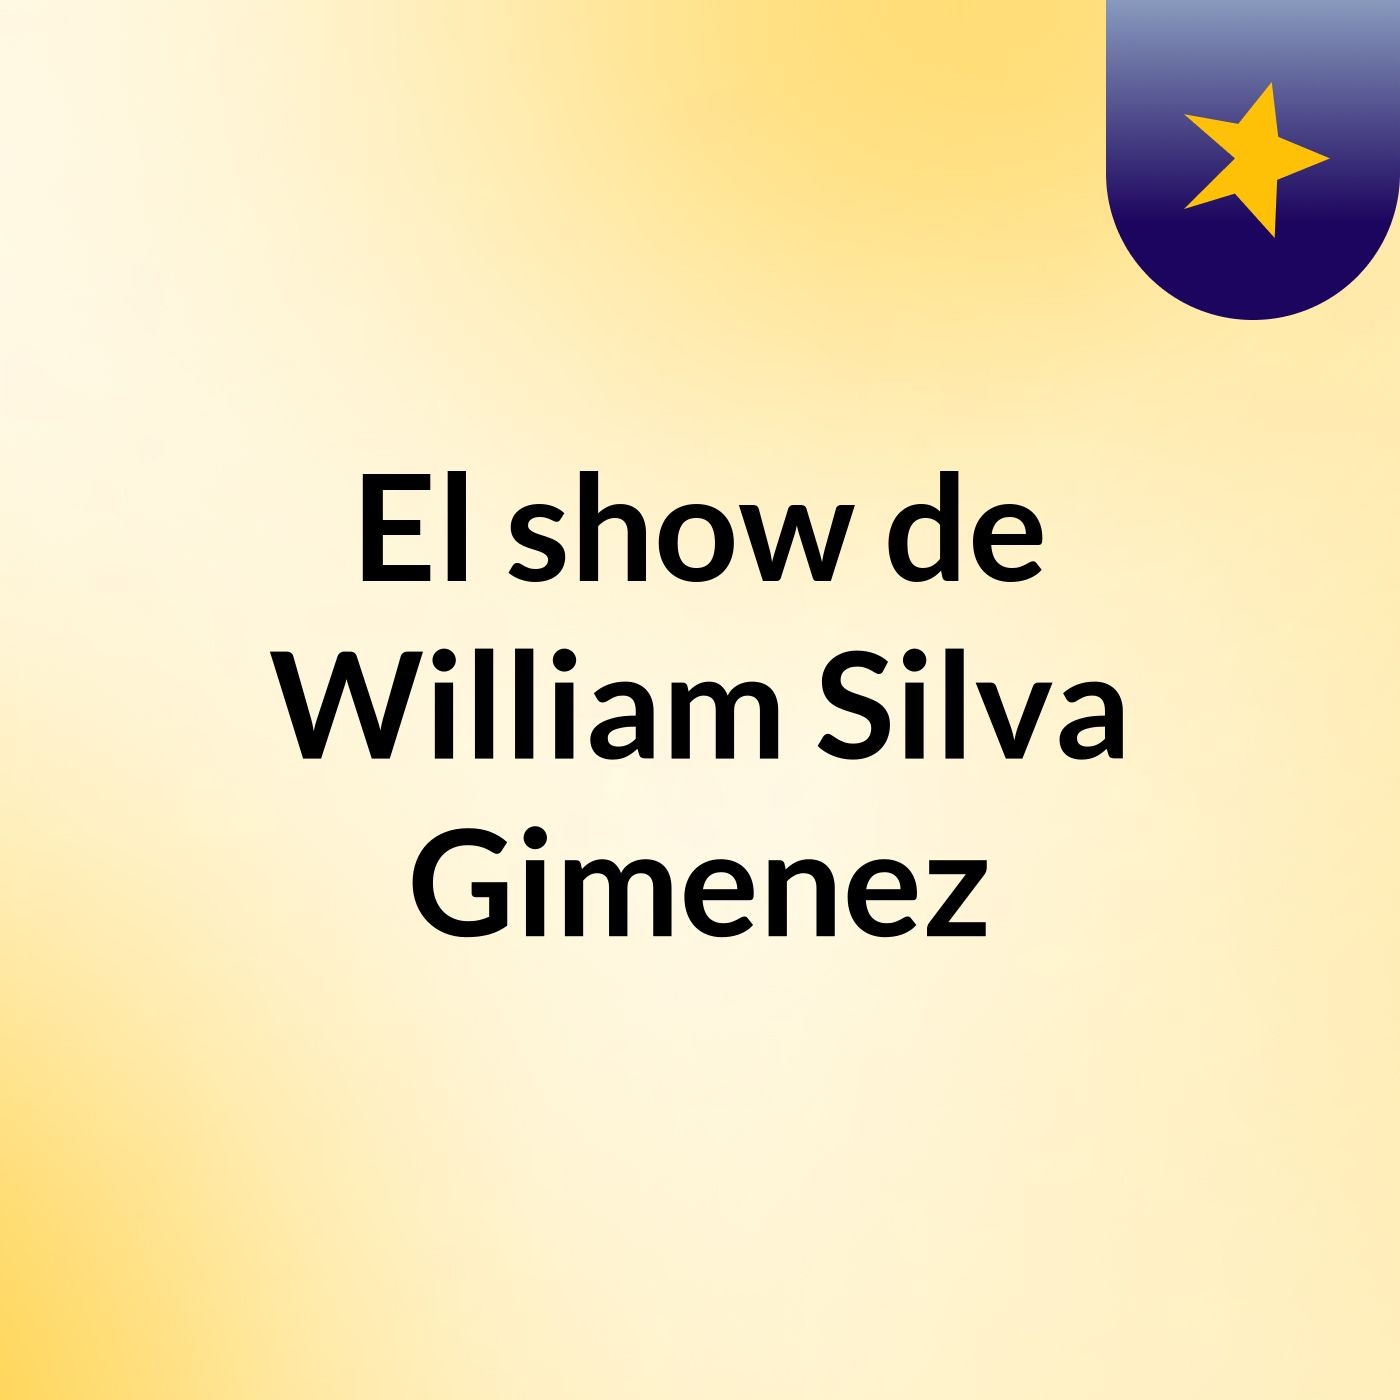 El show de William Silva Gimenez